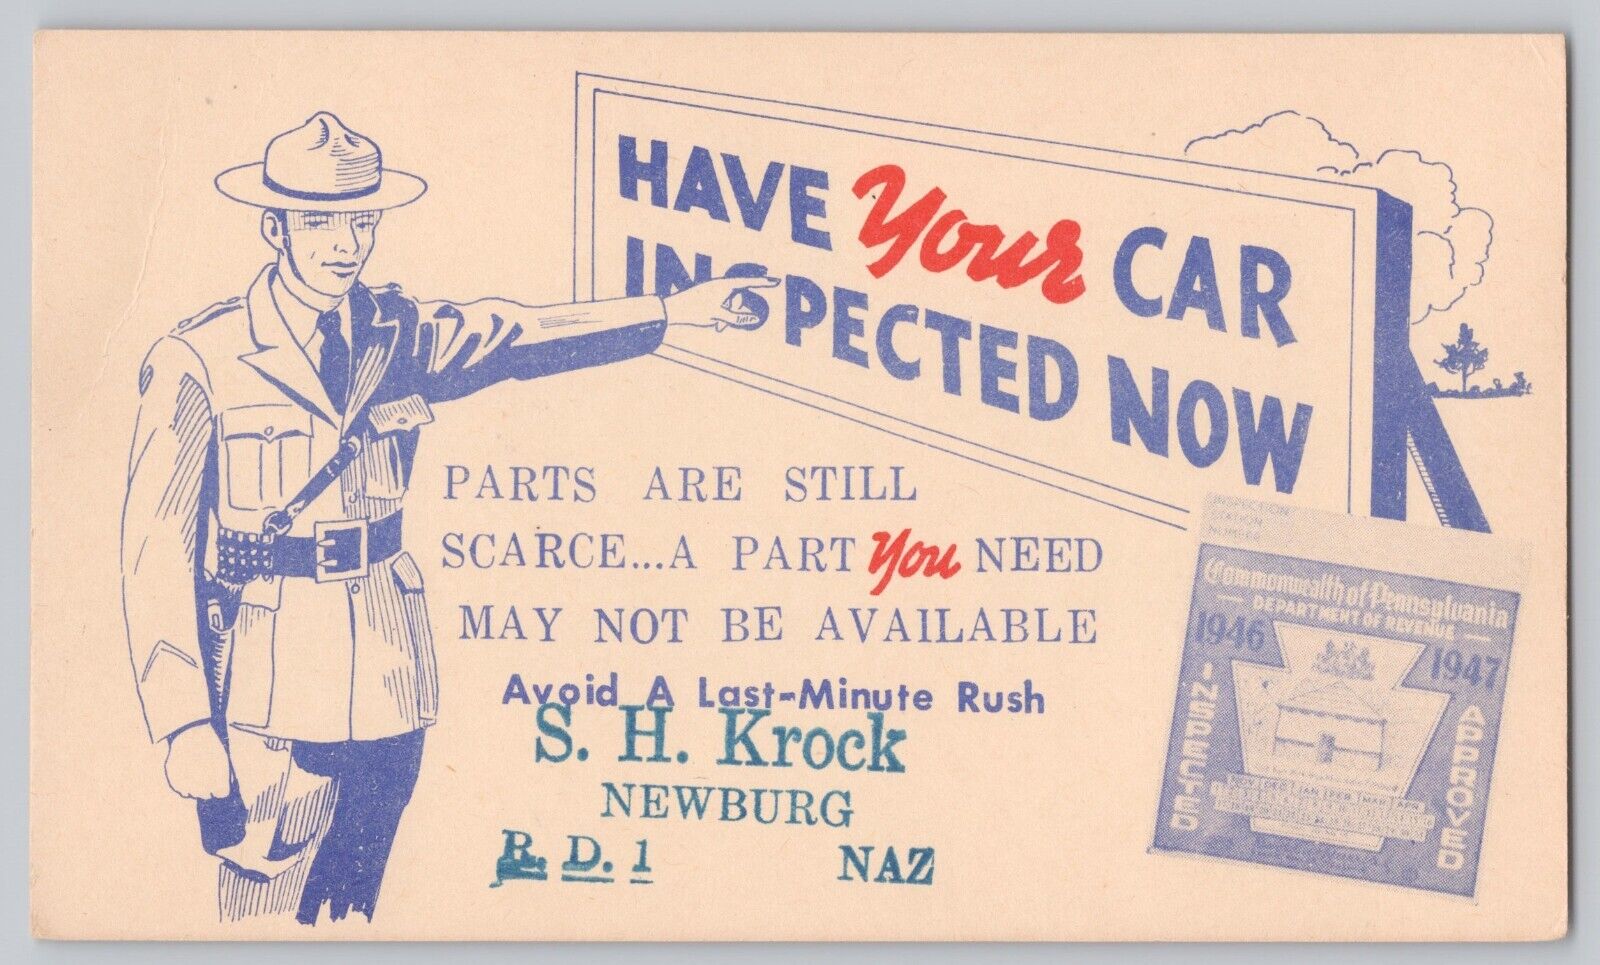 Newburg PA 1946 Advertisement Postcard Postal Card SK Krock Service Station